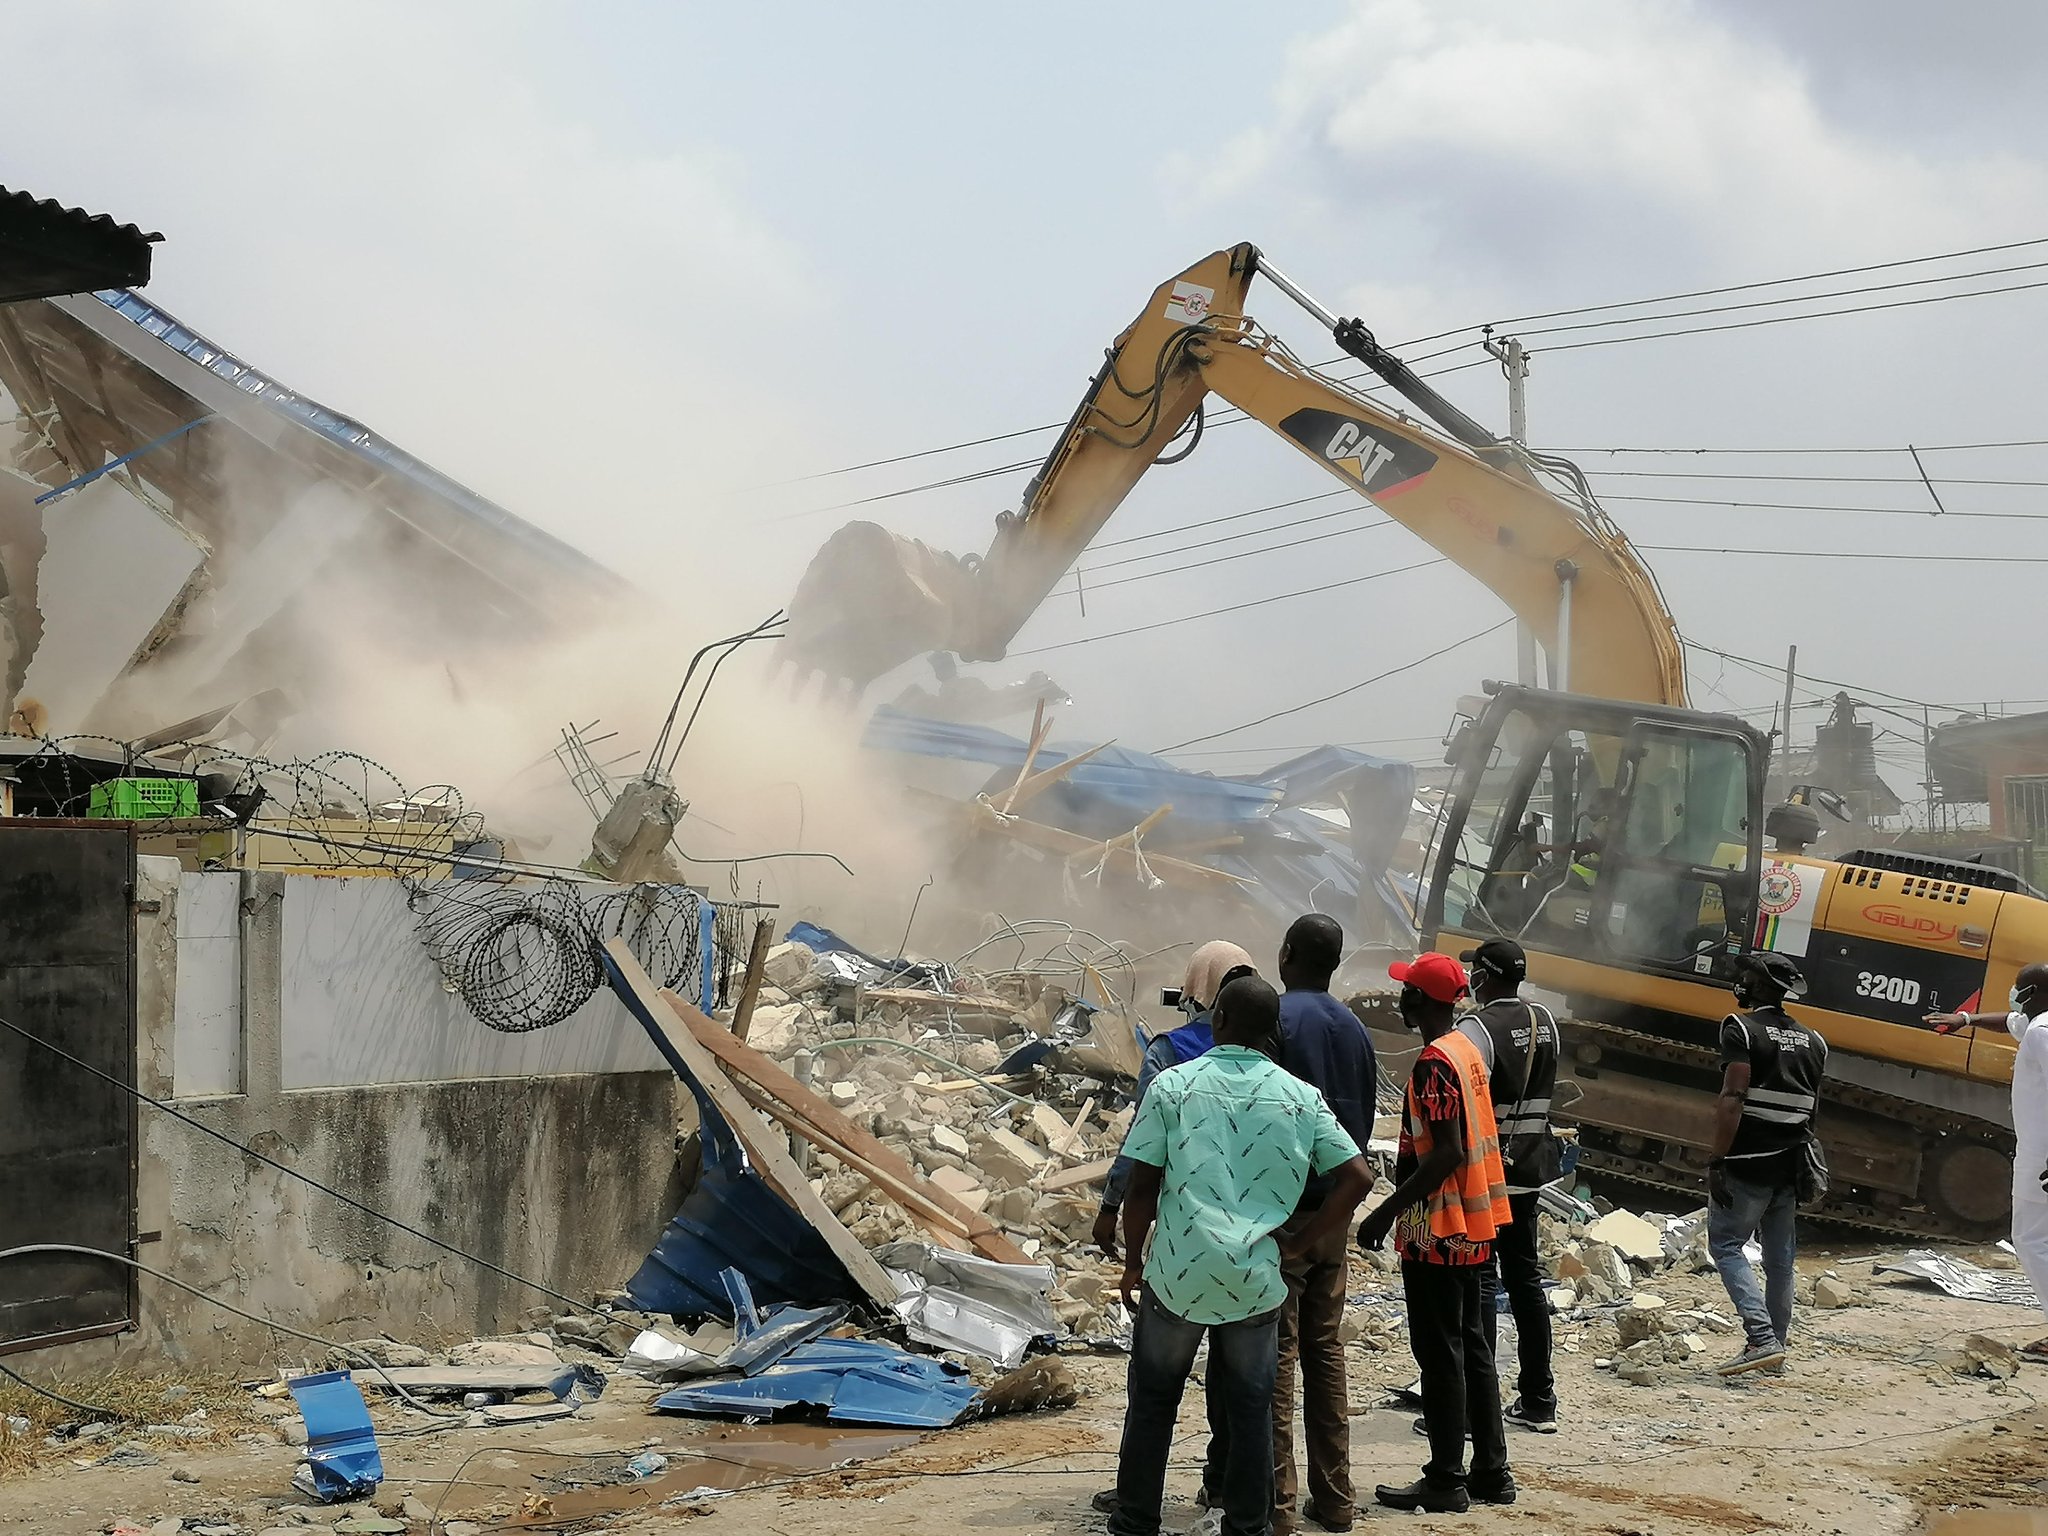 Lagos govt to begin demolition of buildings under powerlines, others